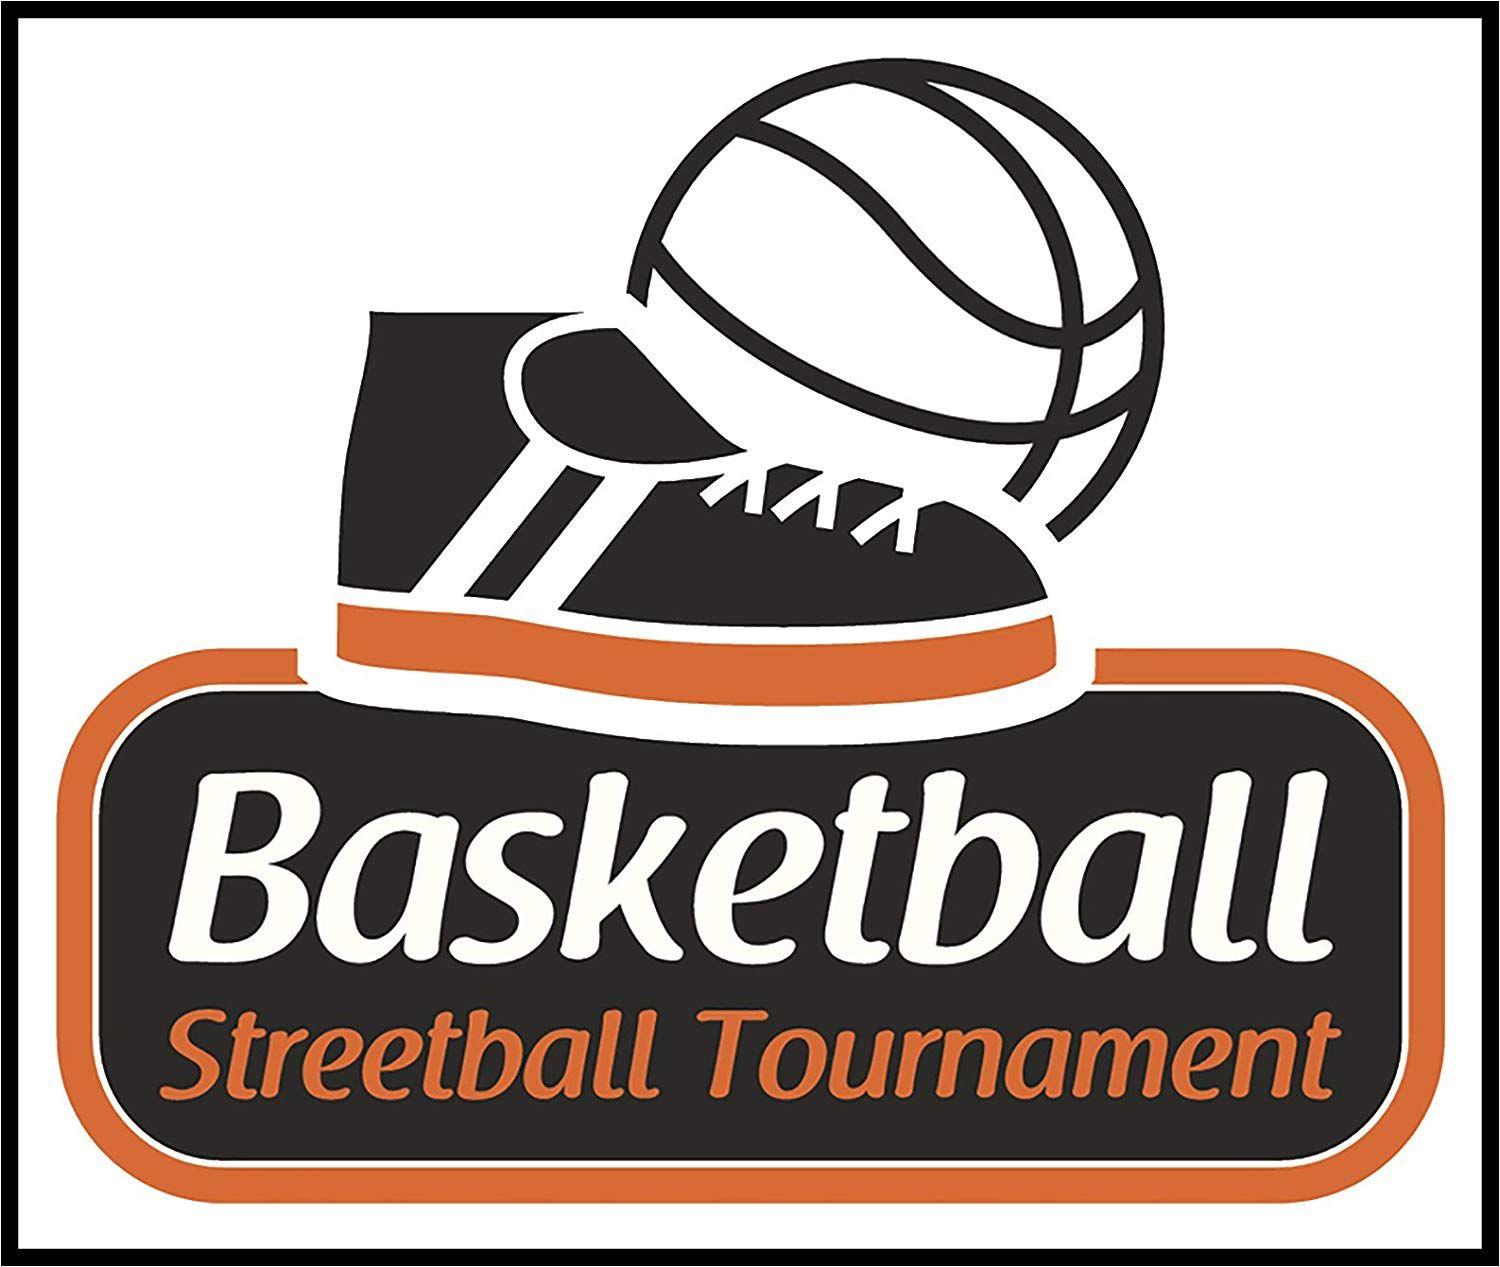 Simple Basketball Logo - Amazon.com: Cool Simple Basketball Sport Championship Tournament ...